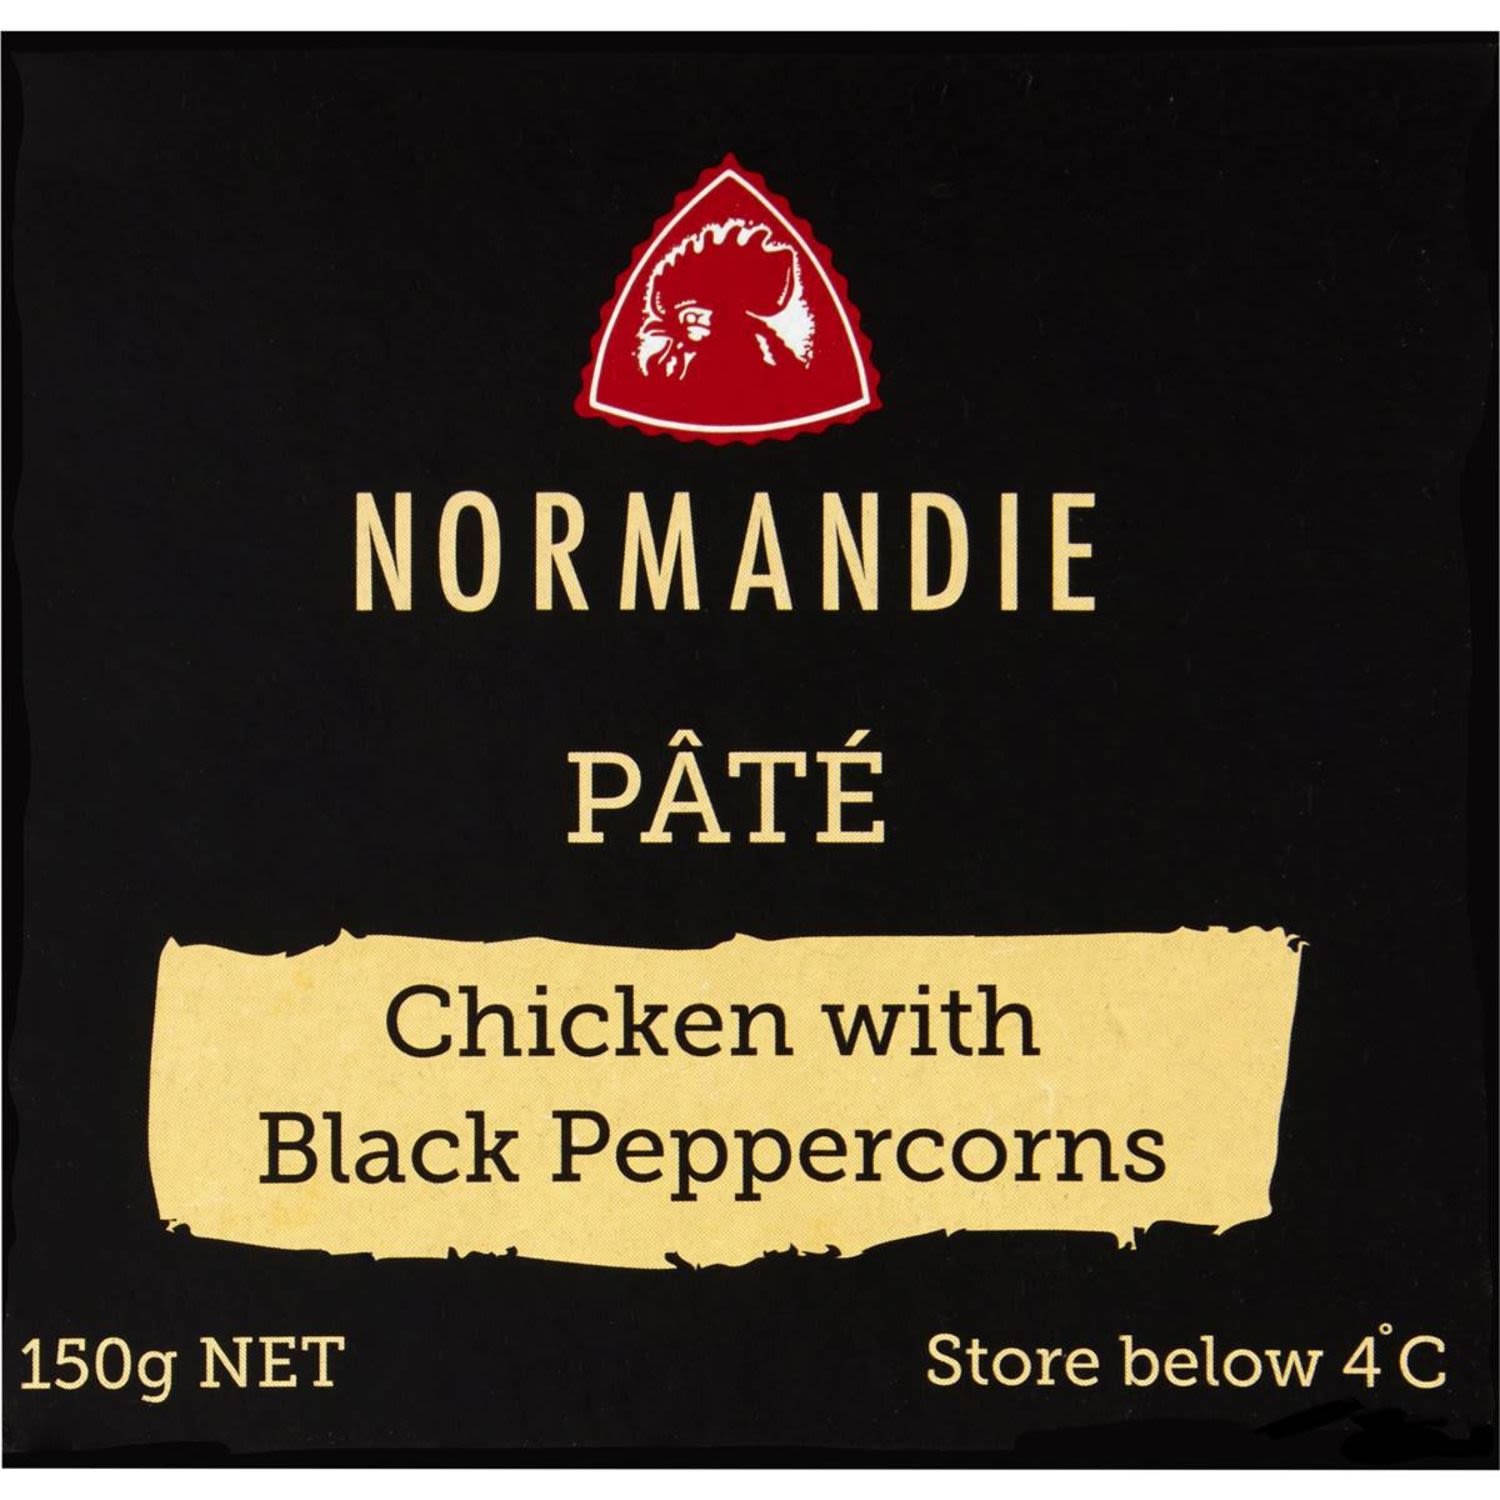 Normandie Pate Chicken & Black Peppercorns, 150 Gram